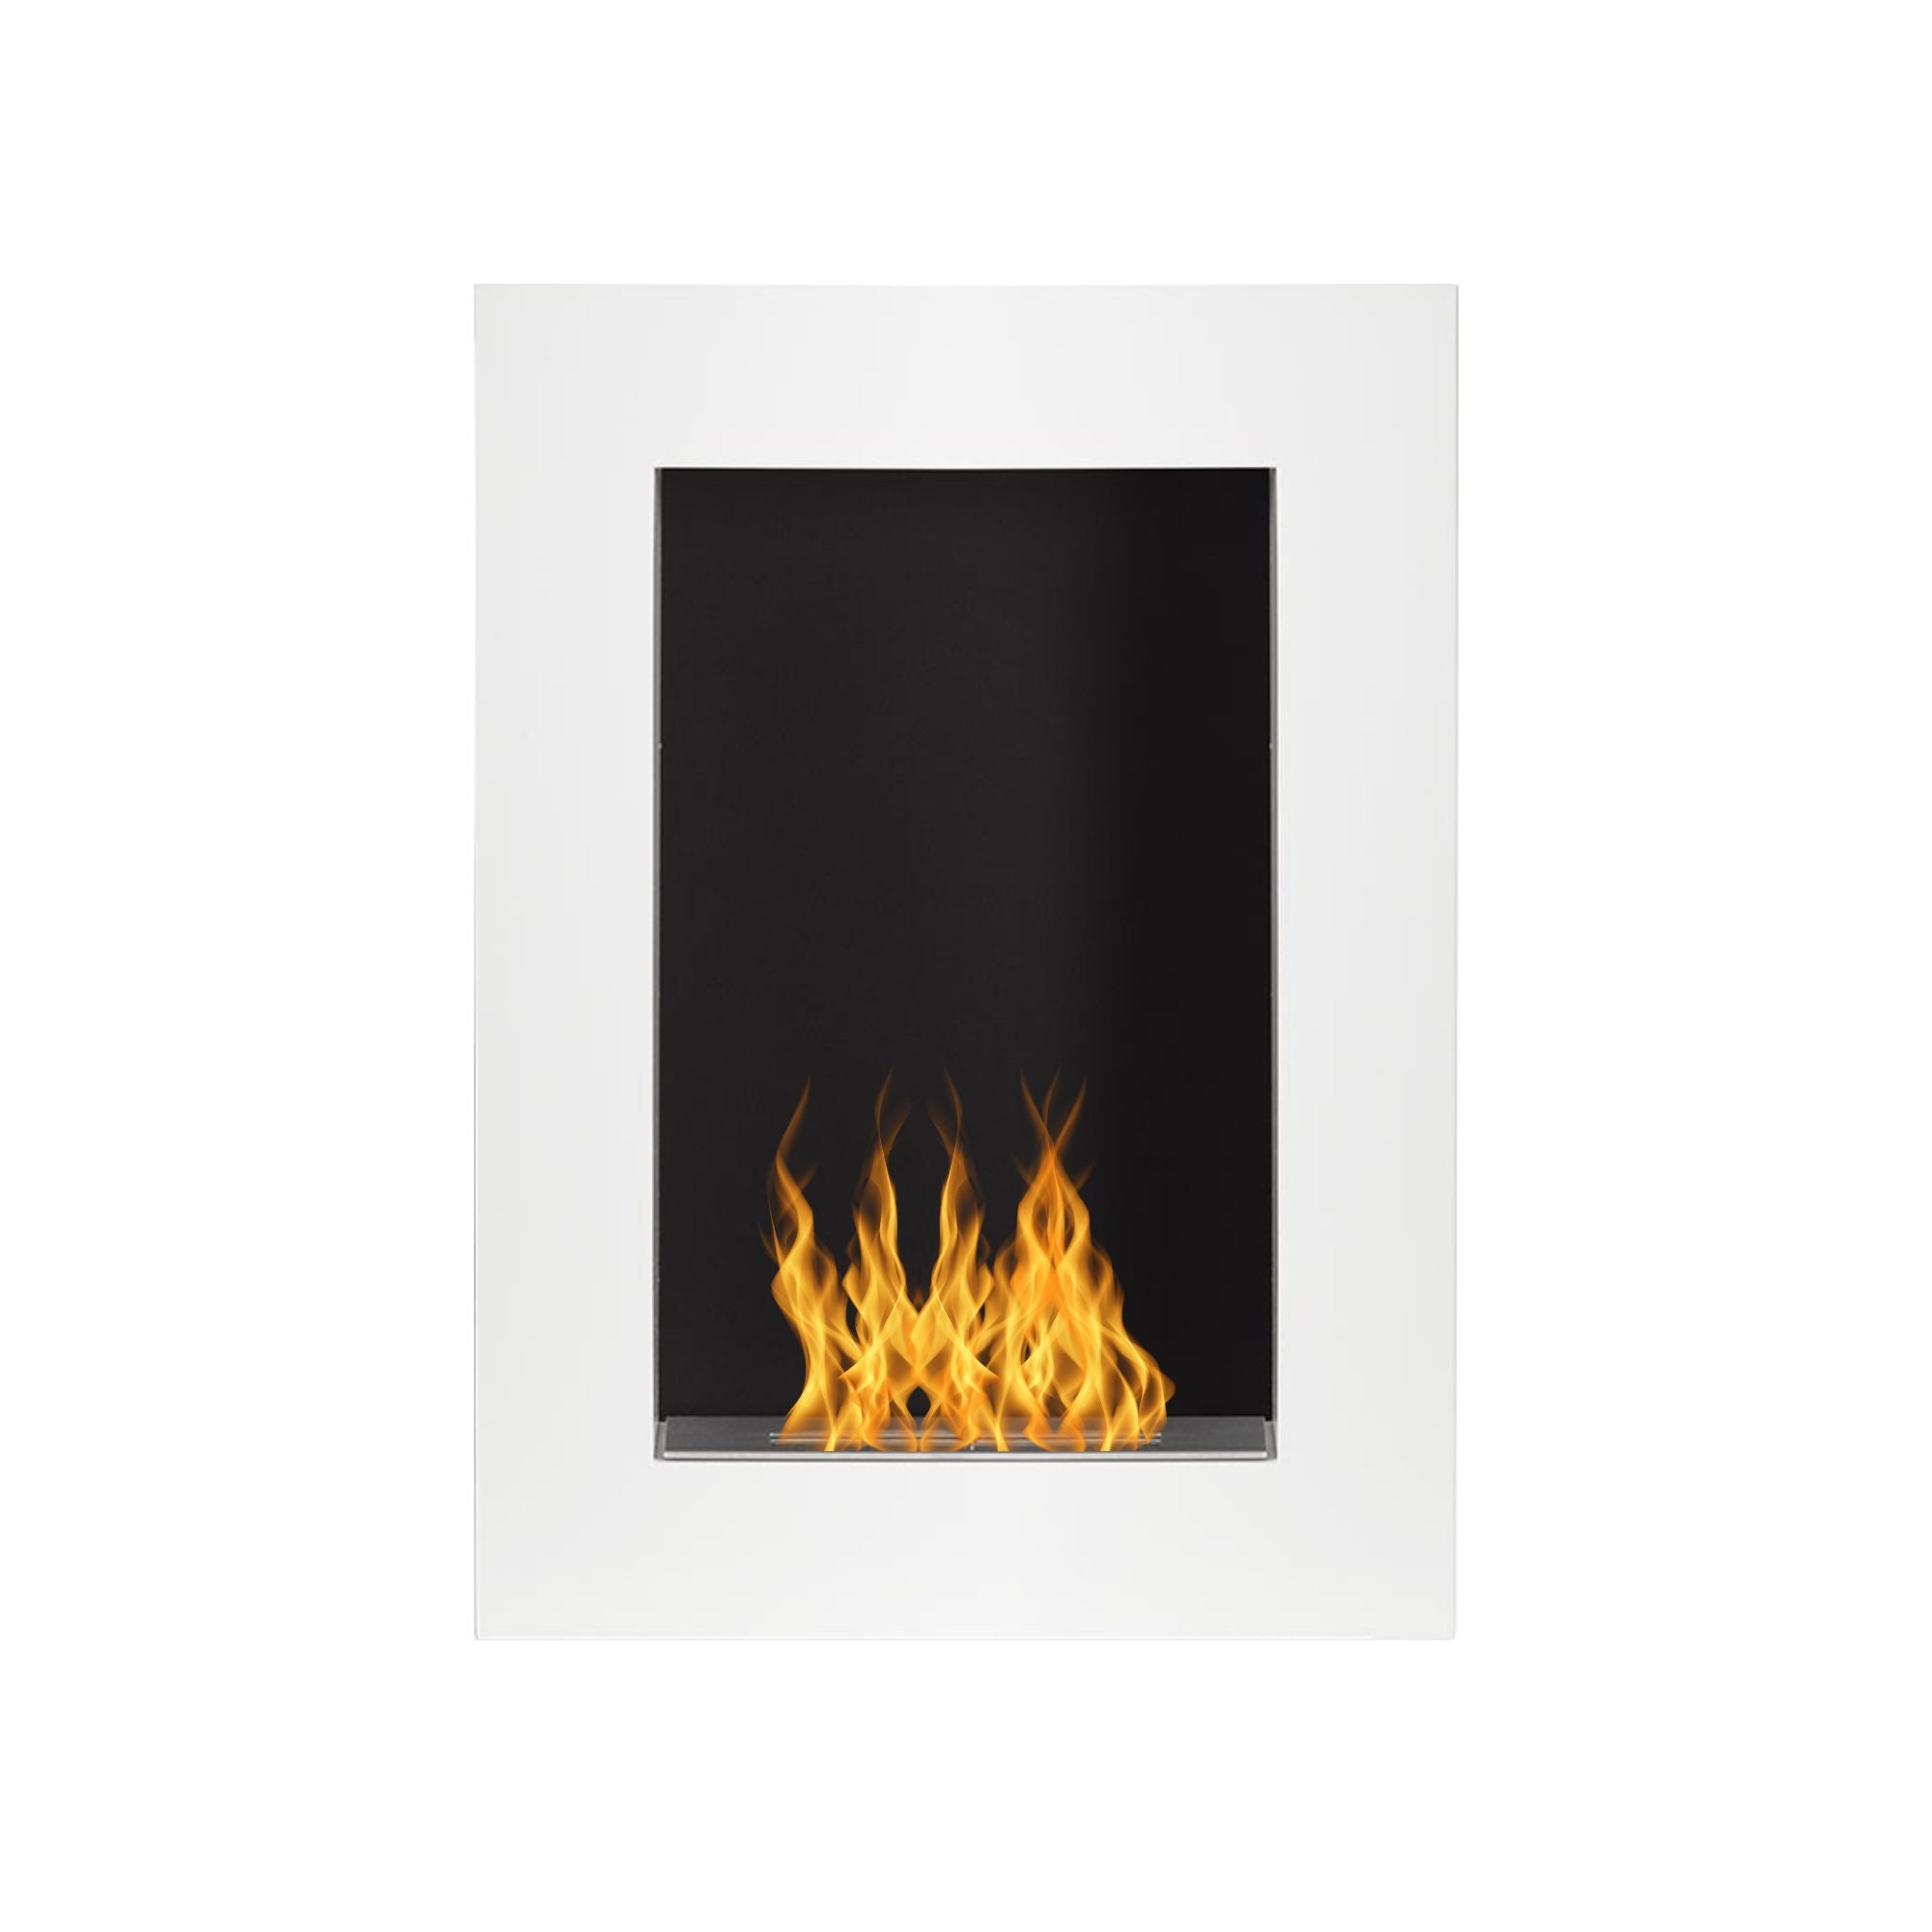 Nina Bio-Ethanol Built-in Fireplace